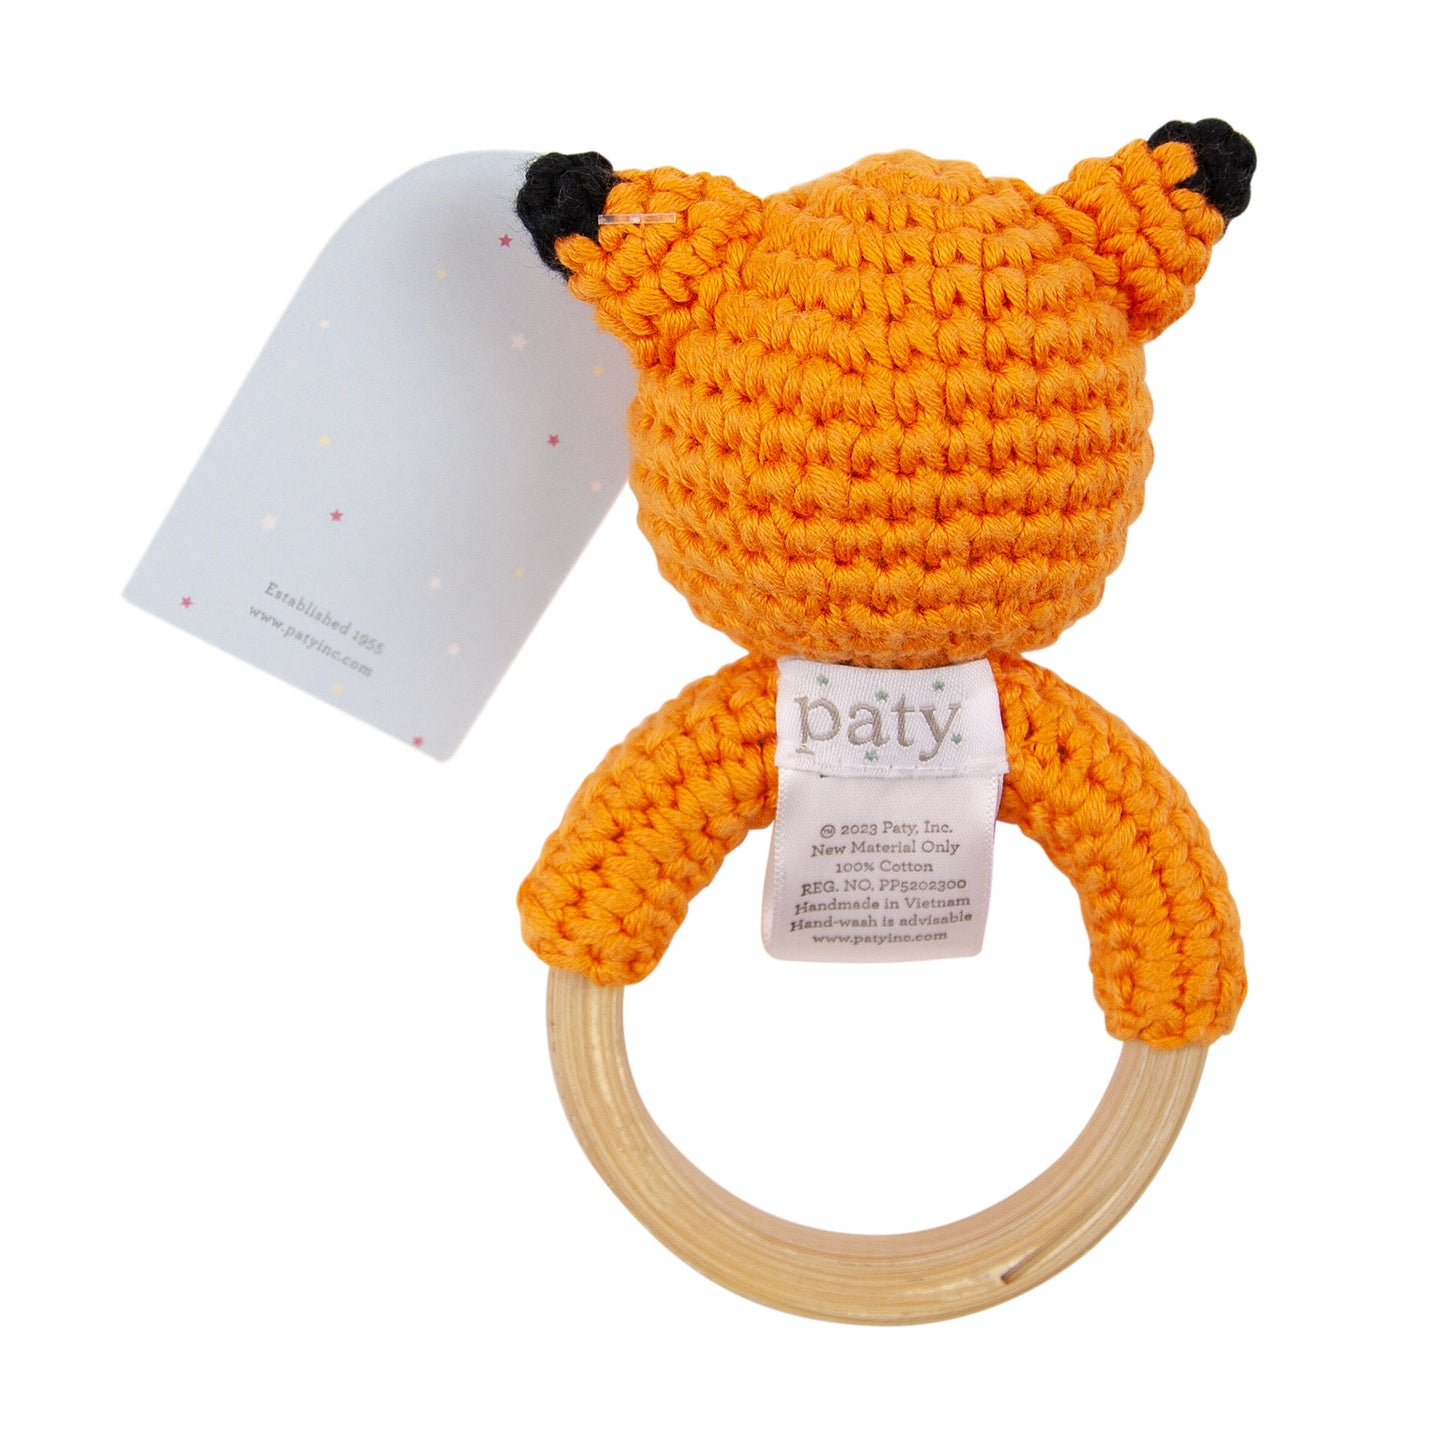 6" Paty Pal Rattle, Crocheted Fox